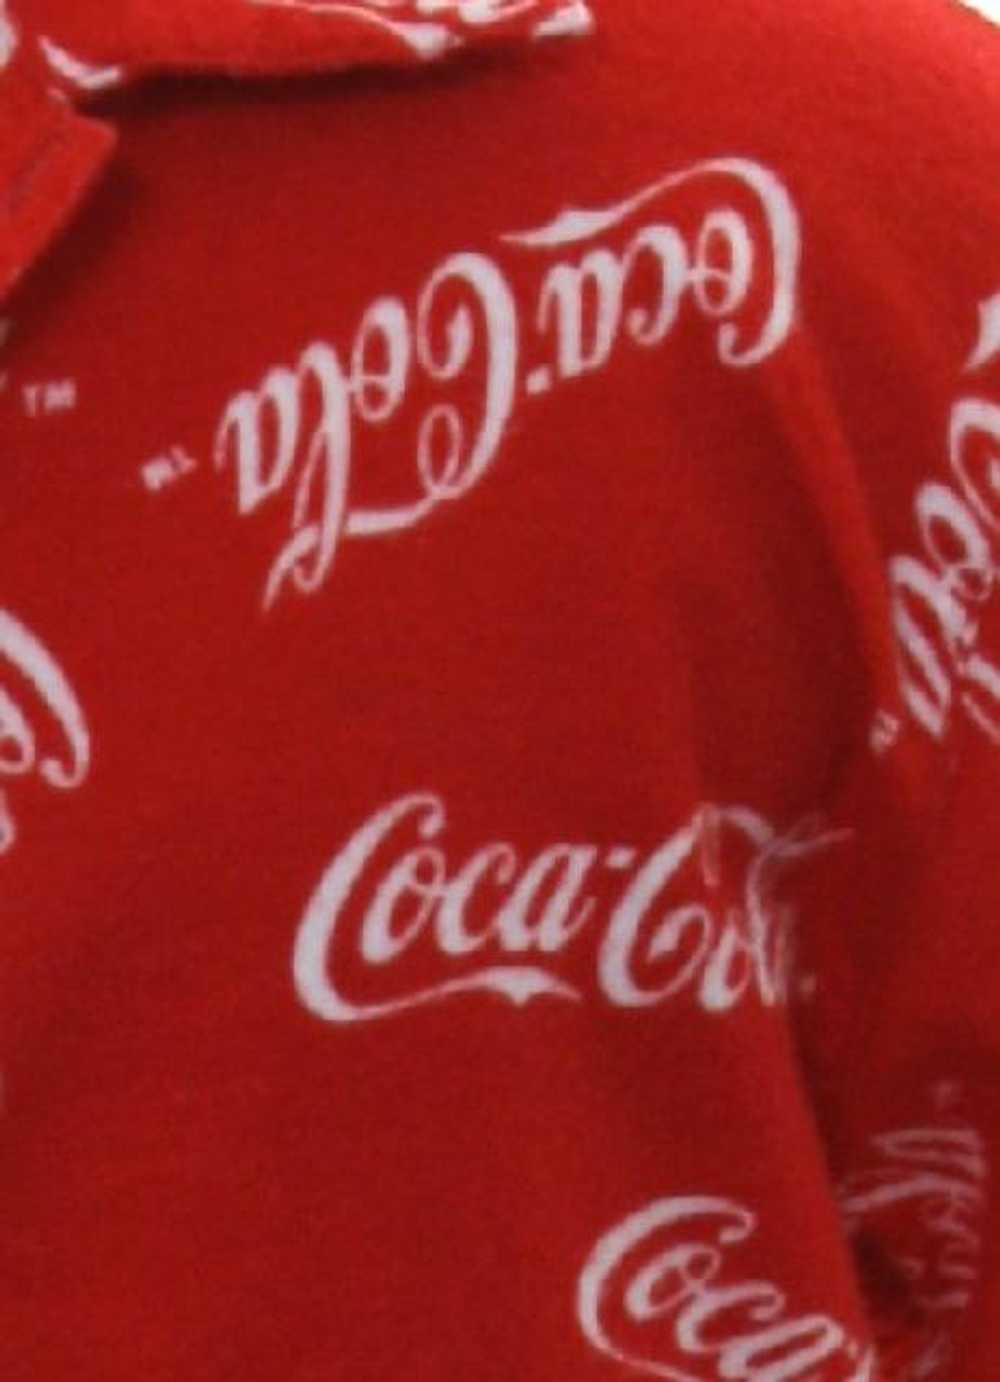 1990's Coca Cola Mens or Boys Pajama Top Shirt - image 2